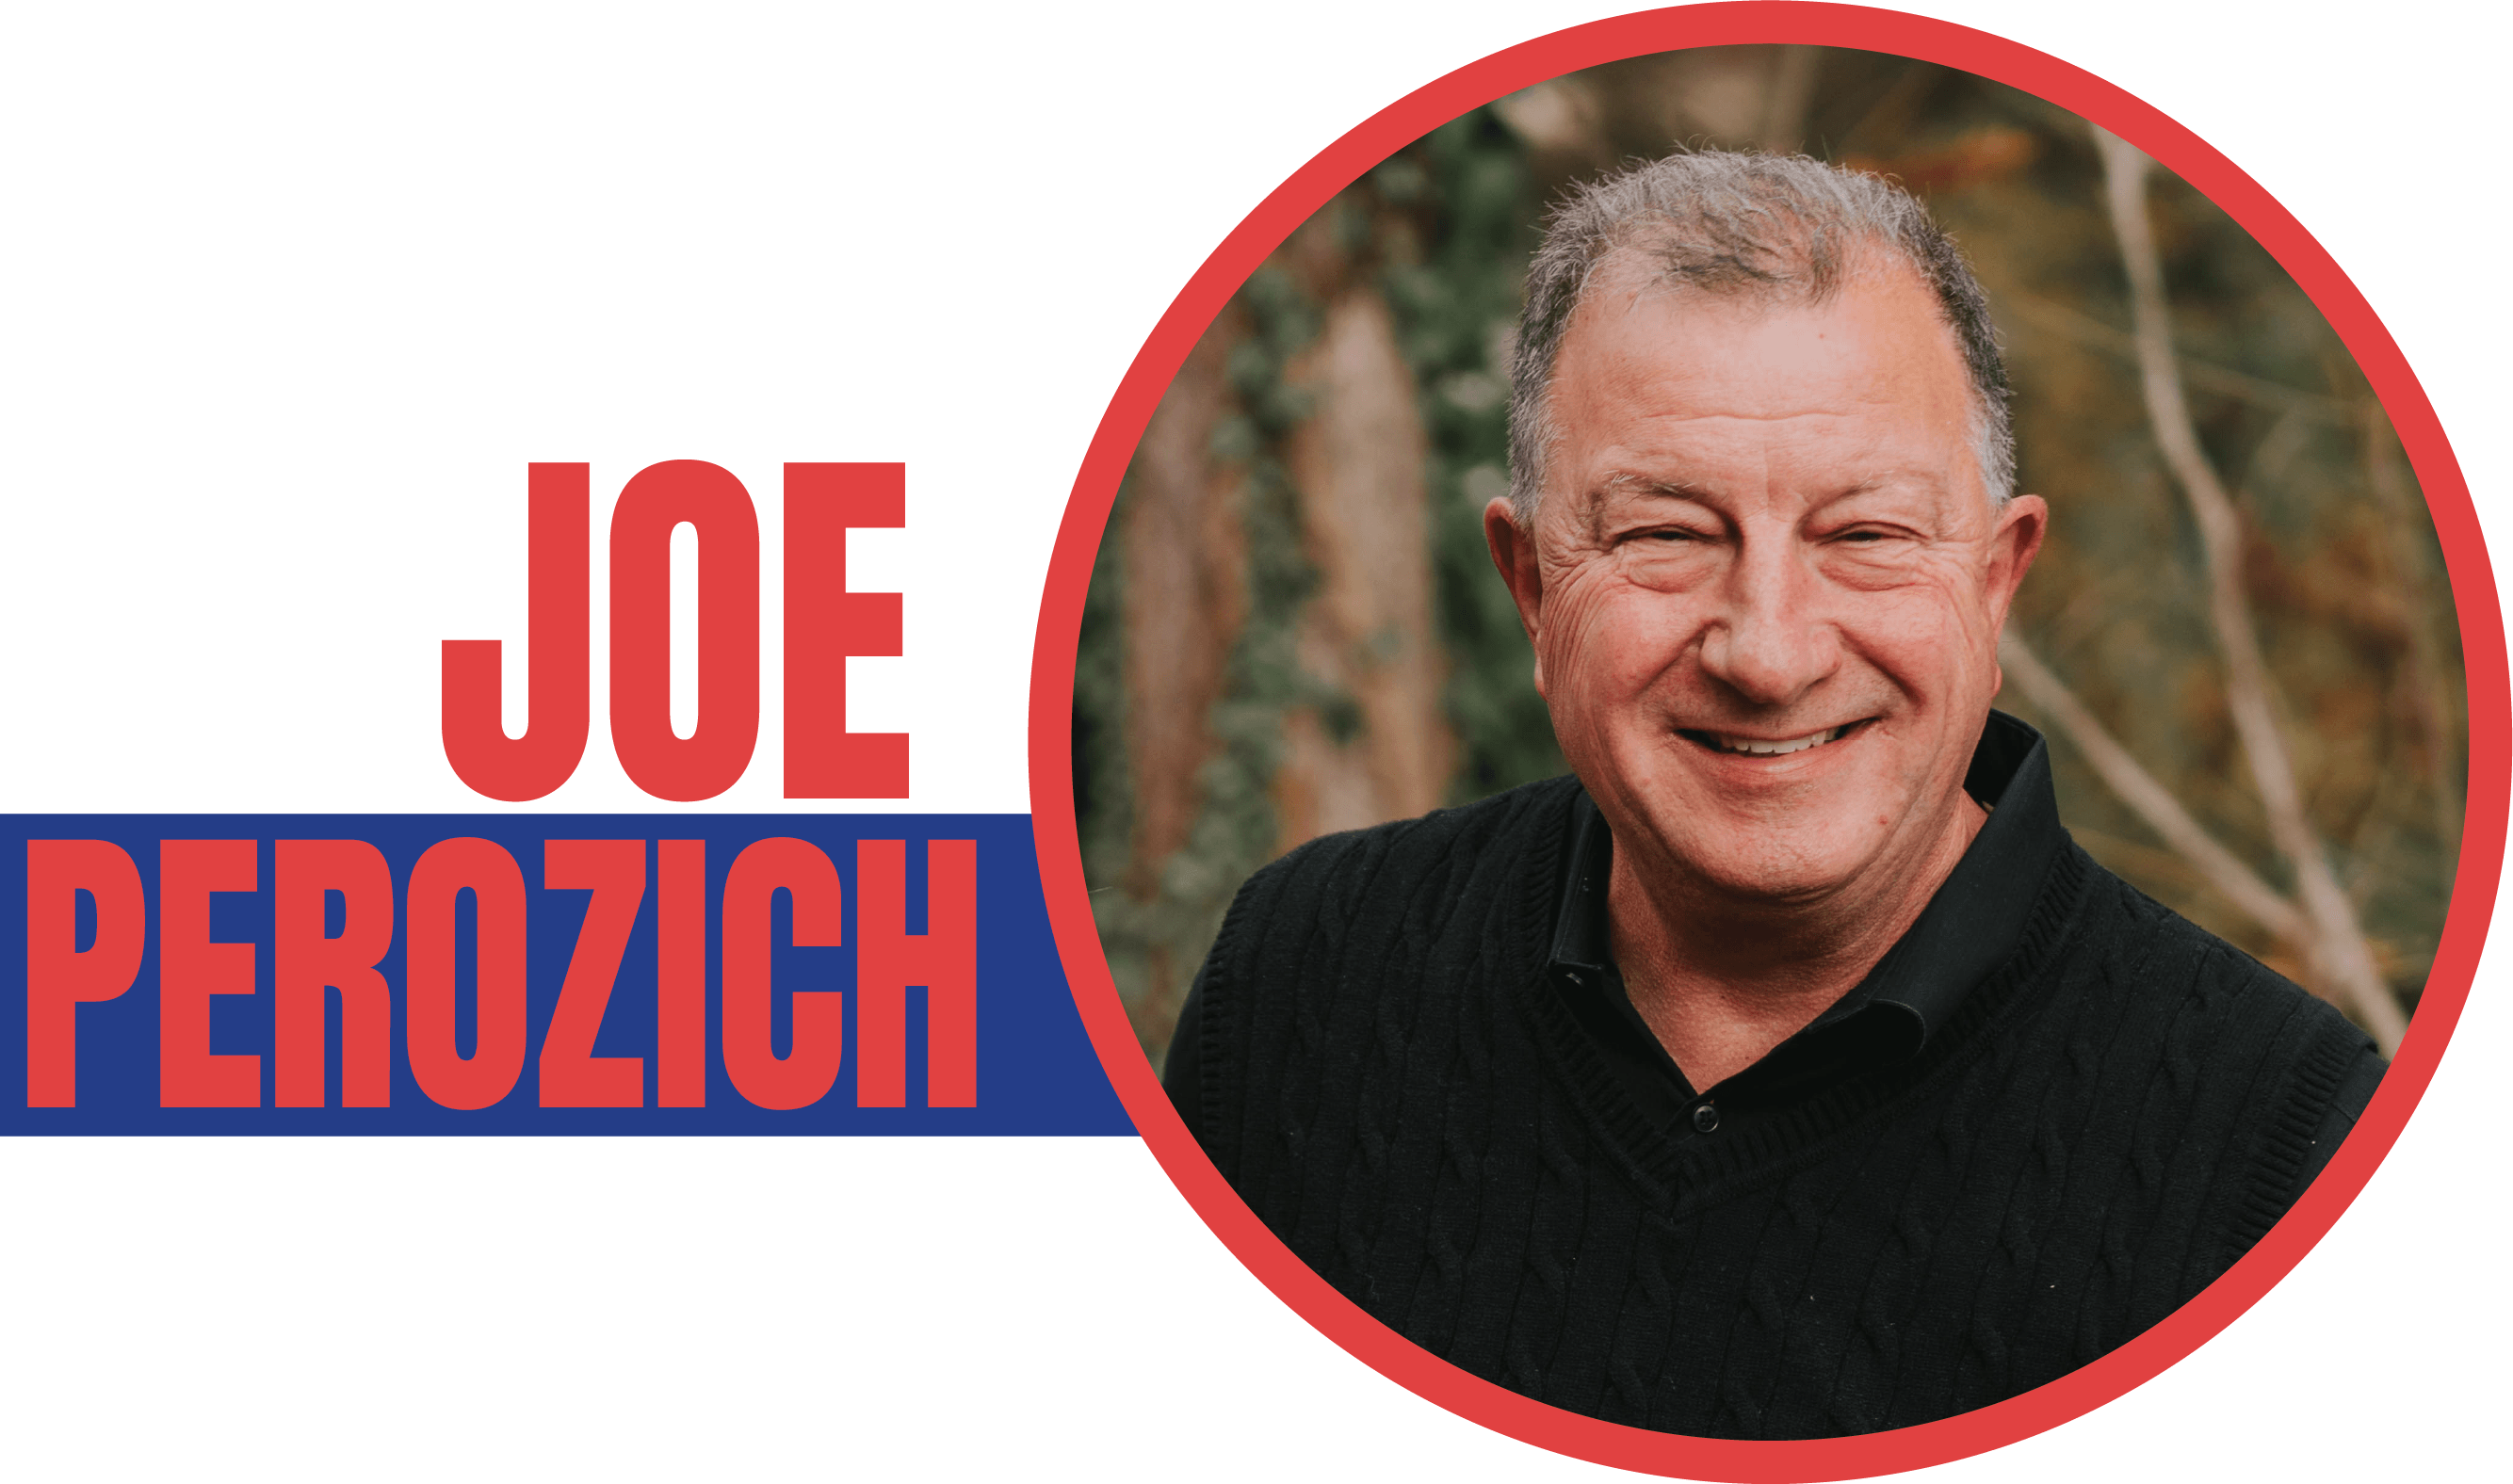 Joe Perozich